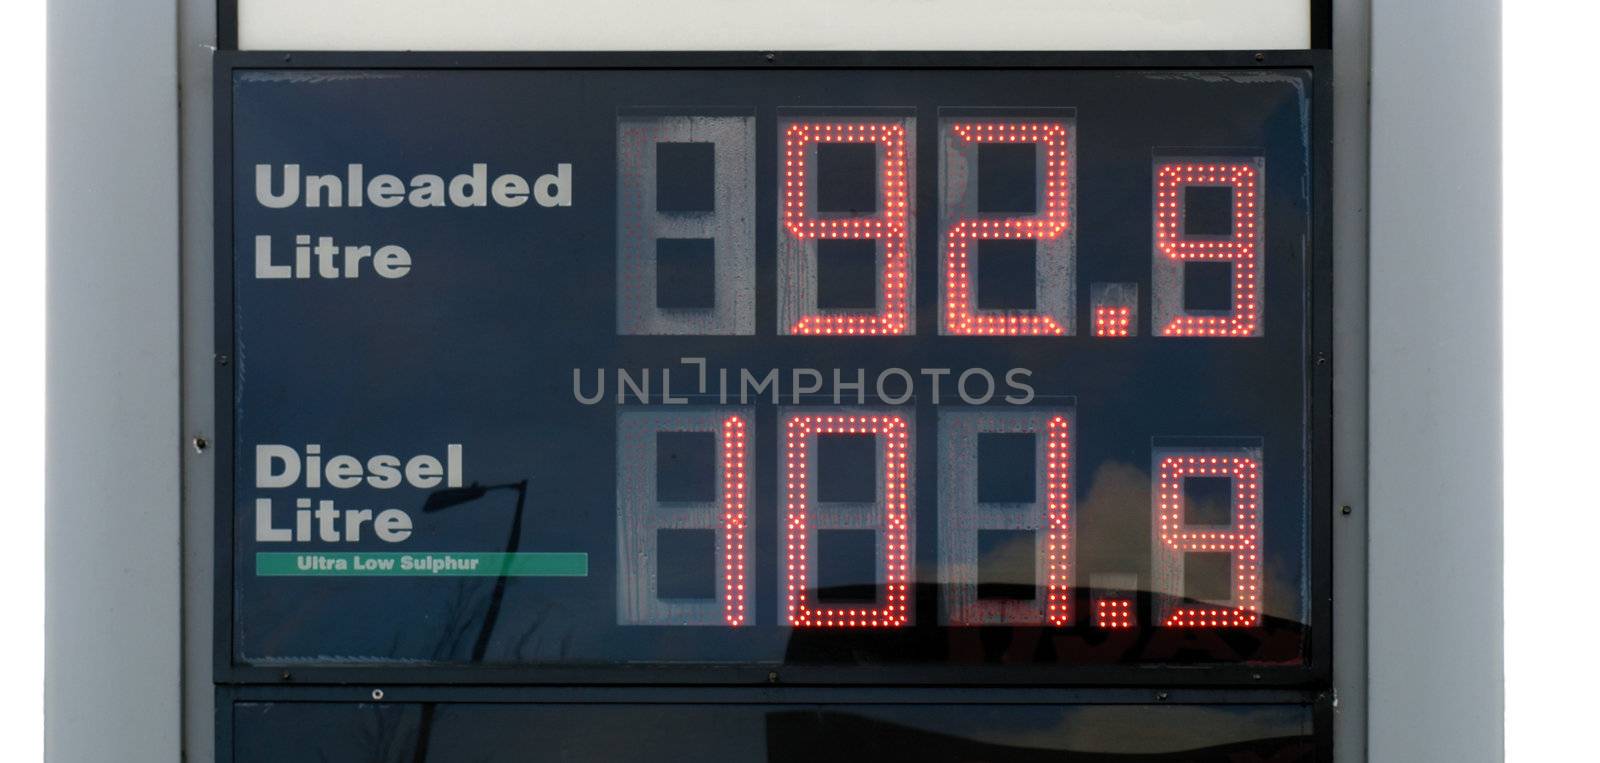 Display showing unlead and diesel gasoline price